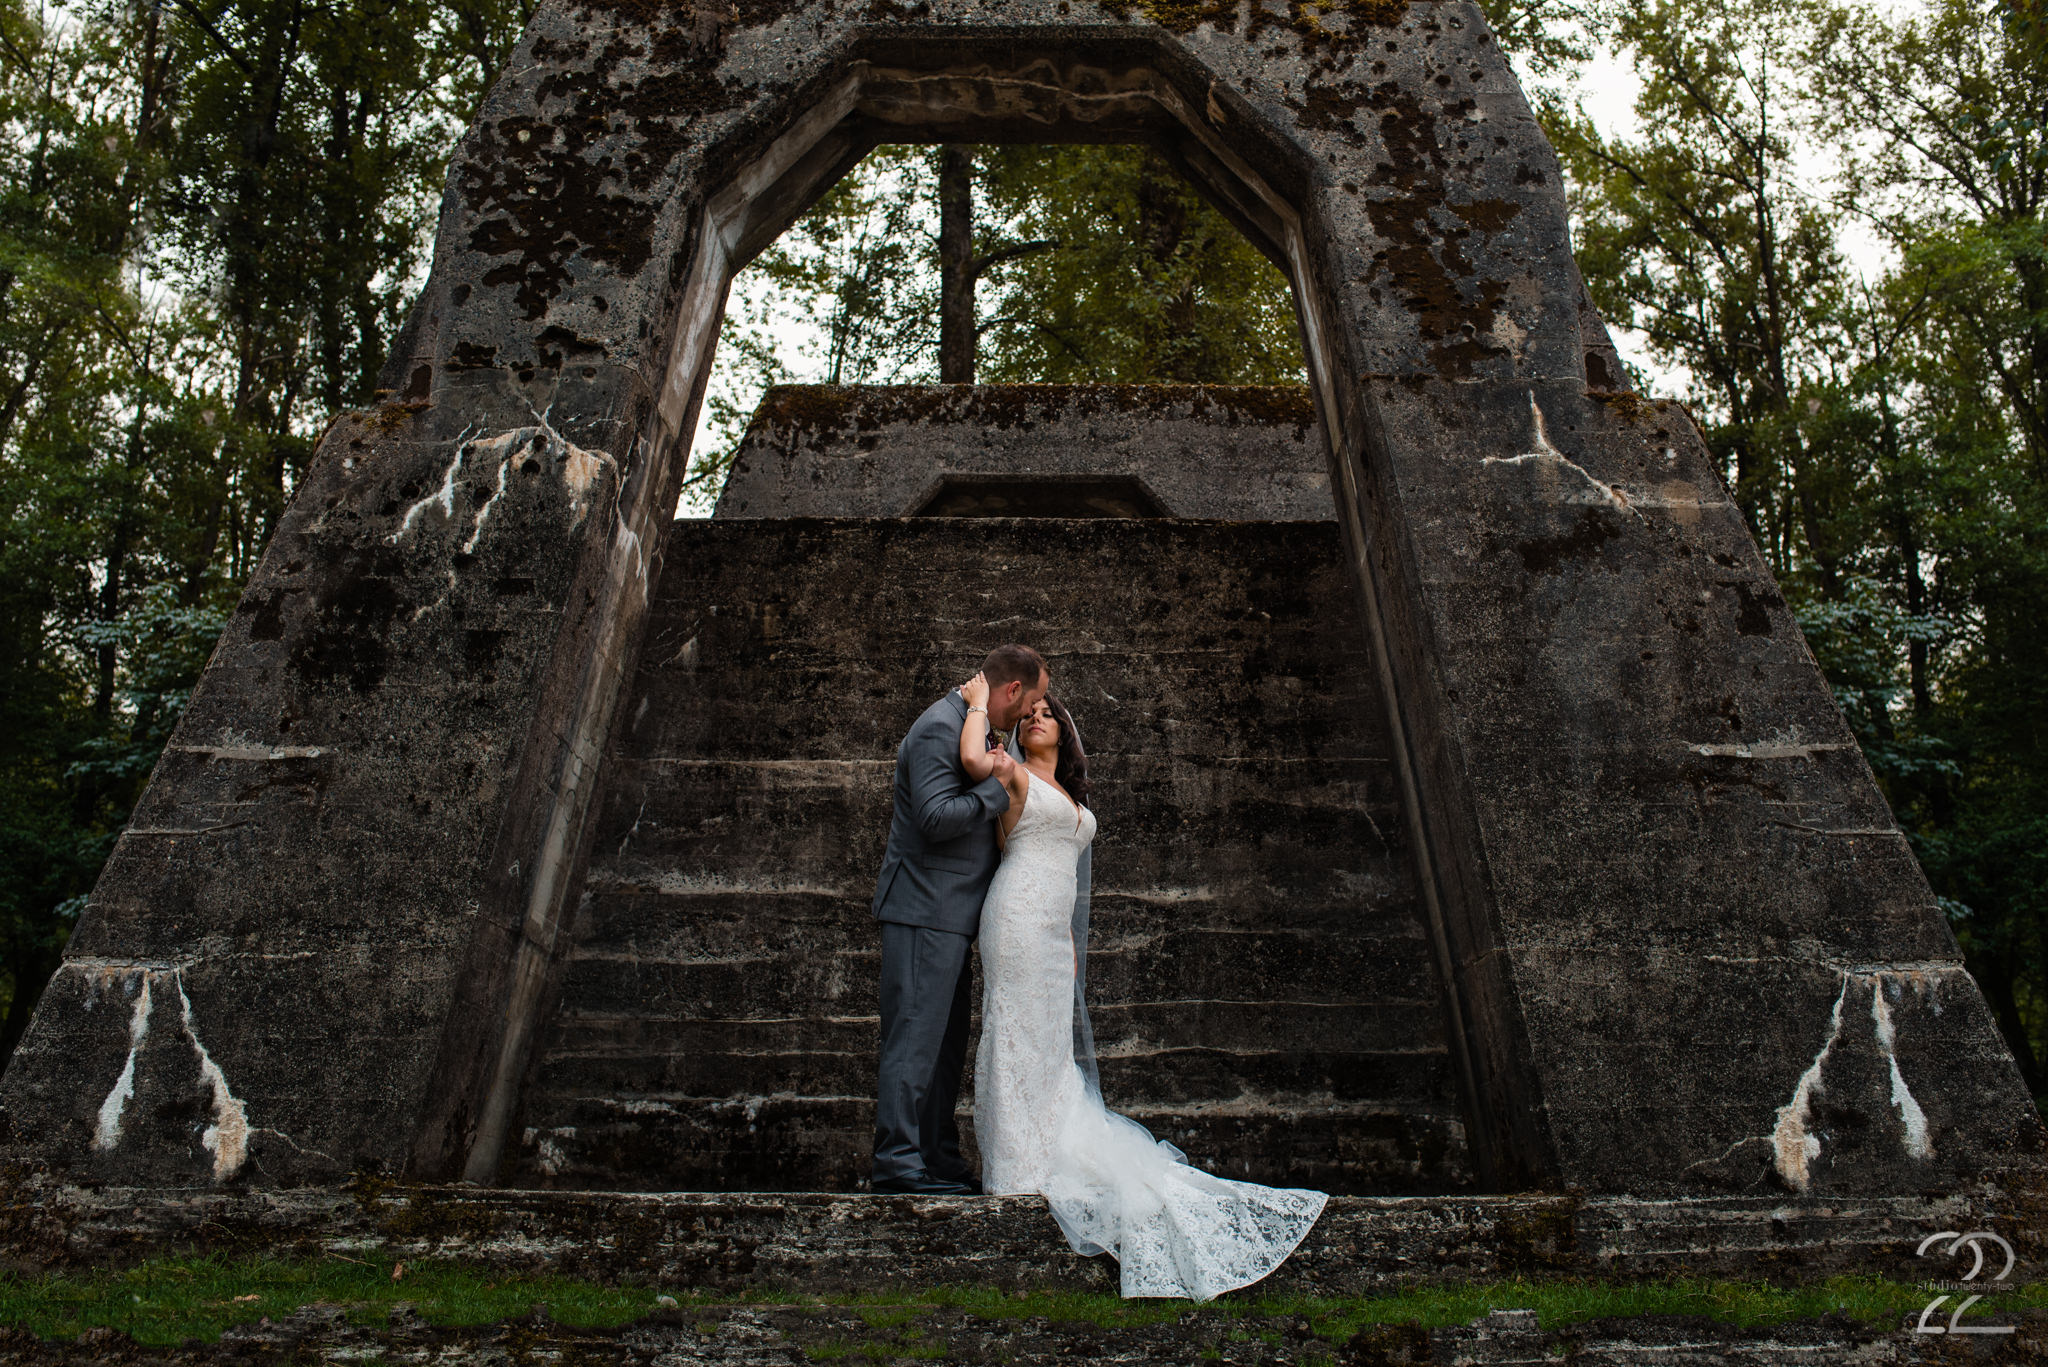 Studio 22 Photography - Wedding Photographers in Vancouver